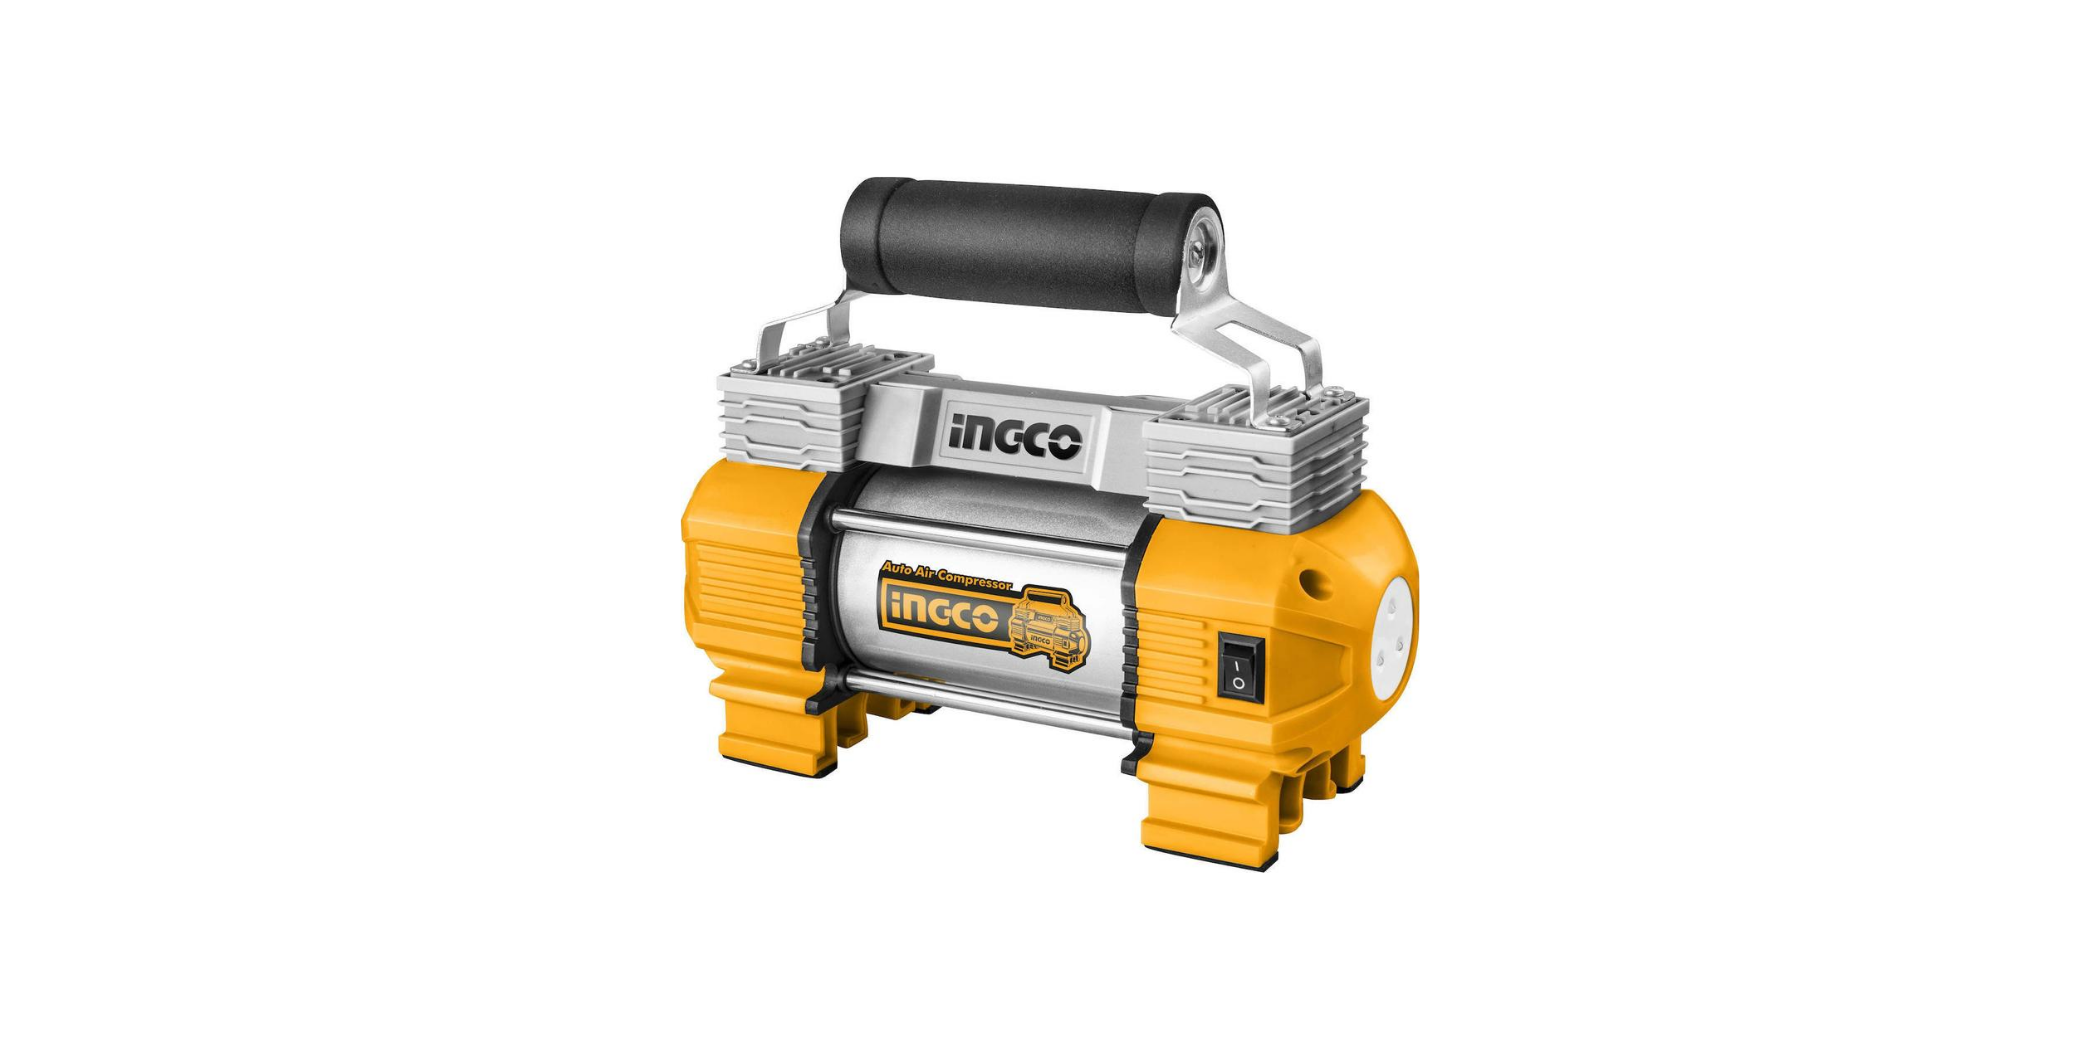 Ingco Aac2508 Auto Air Compressor